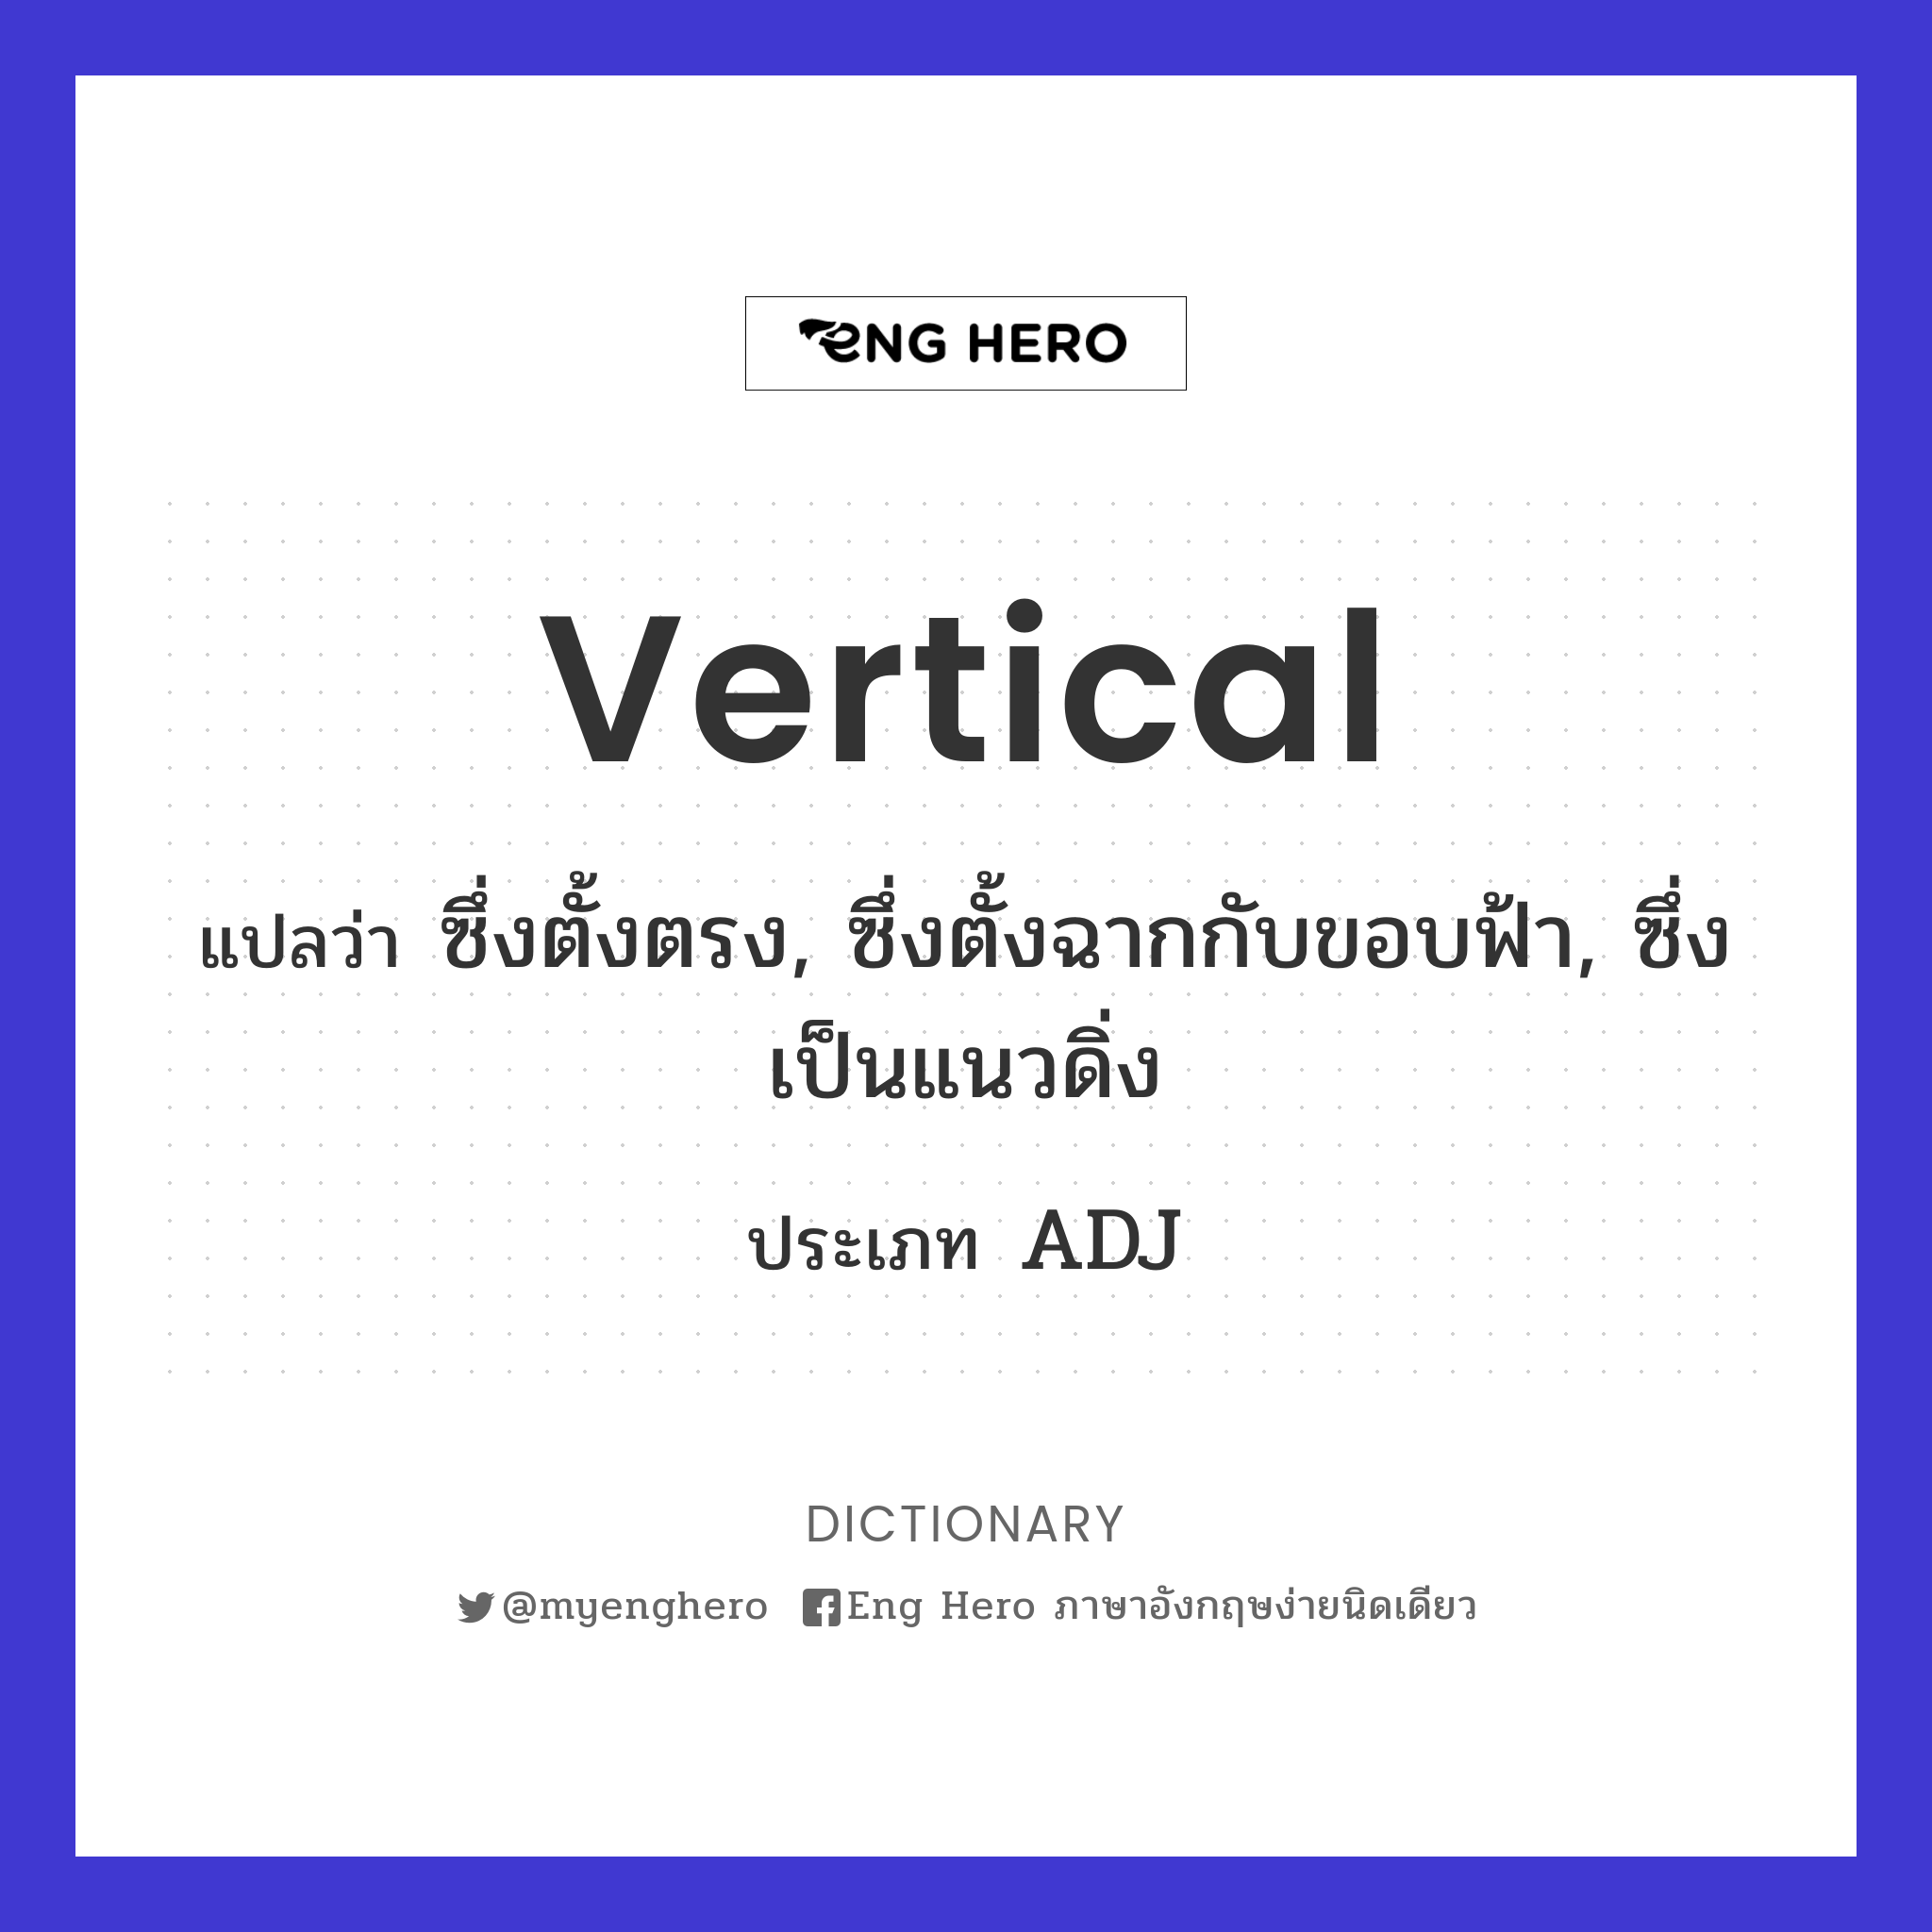 vertical